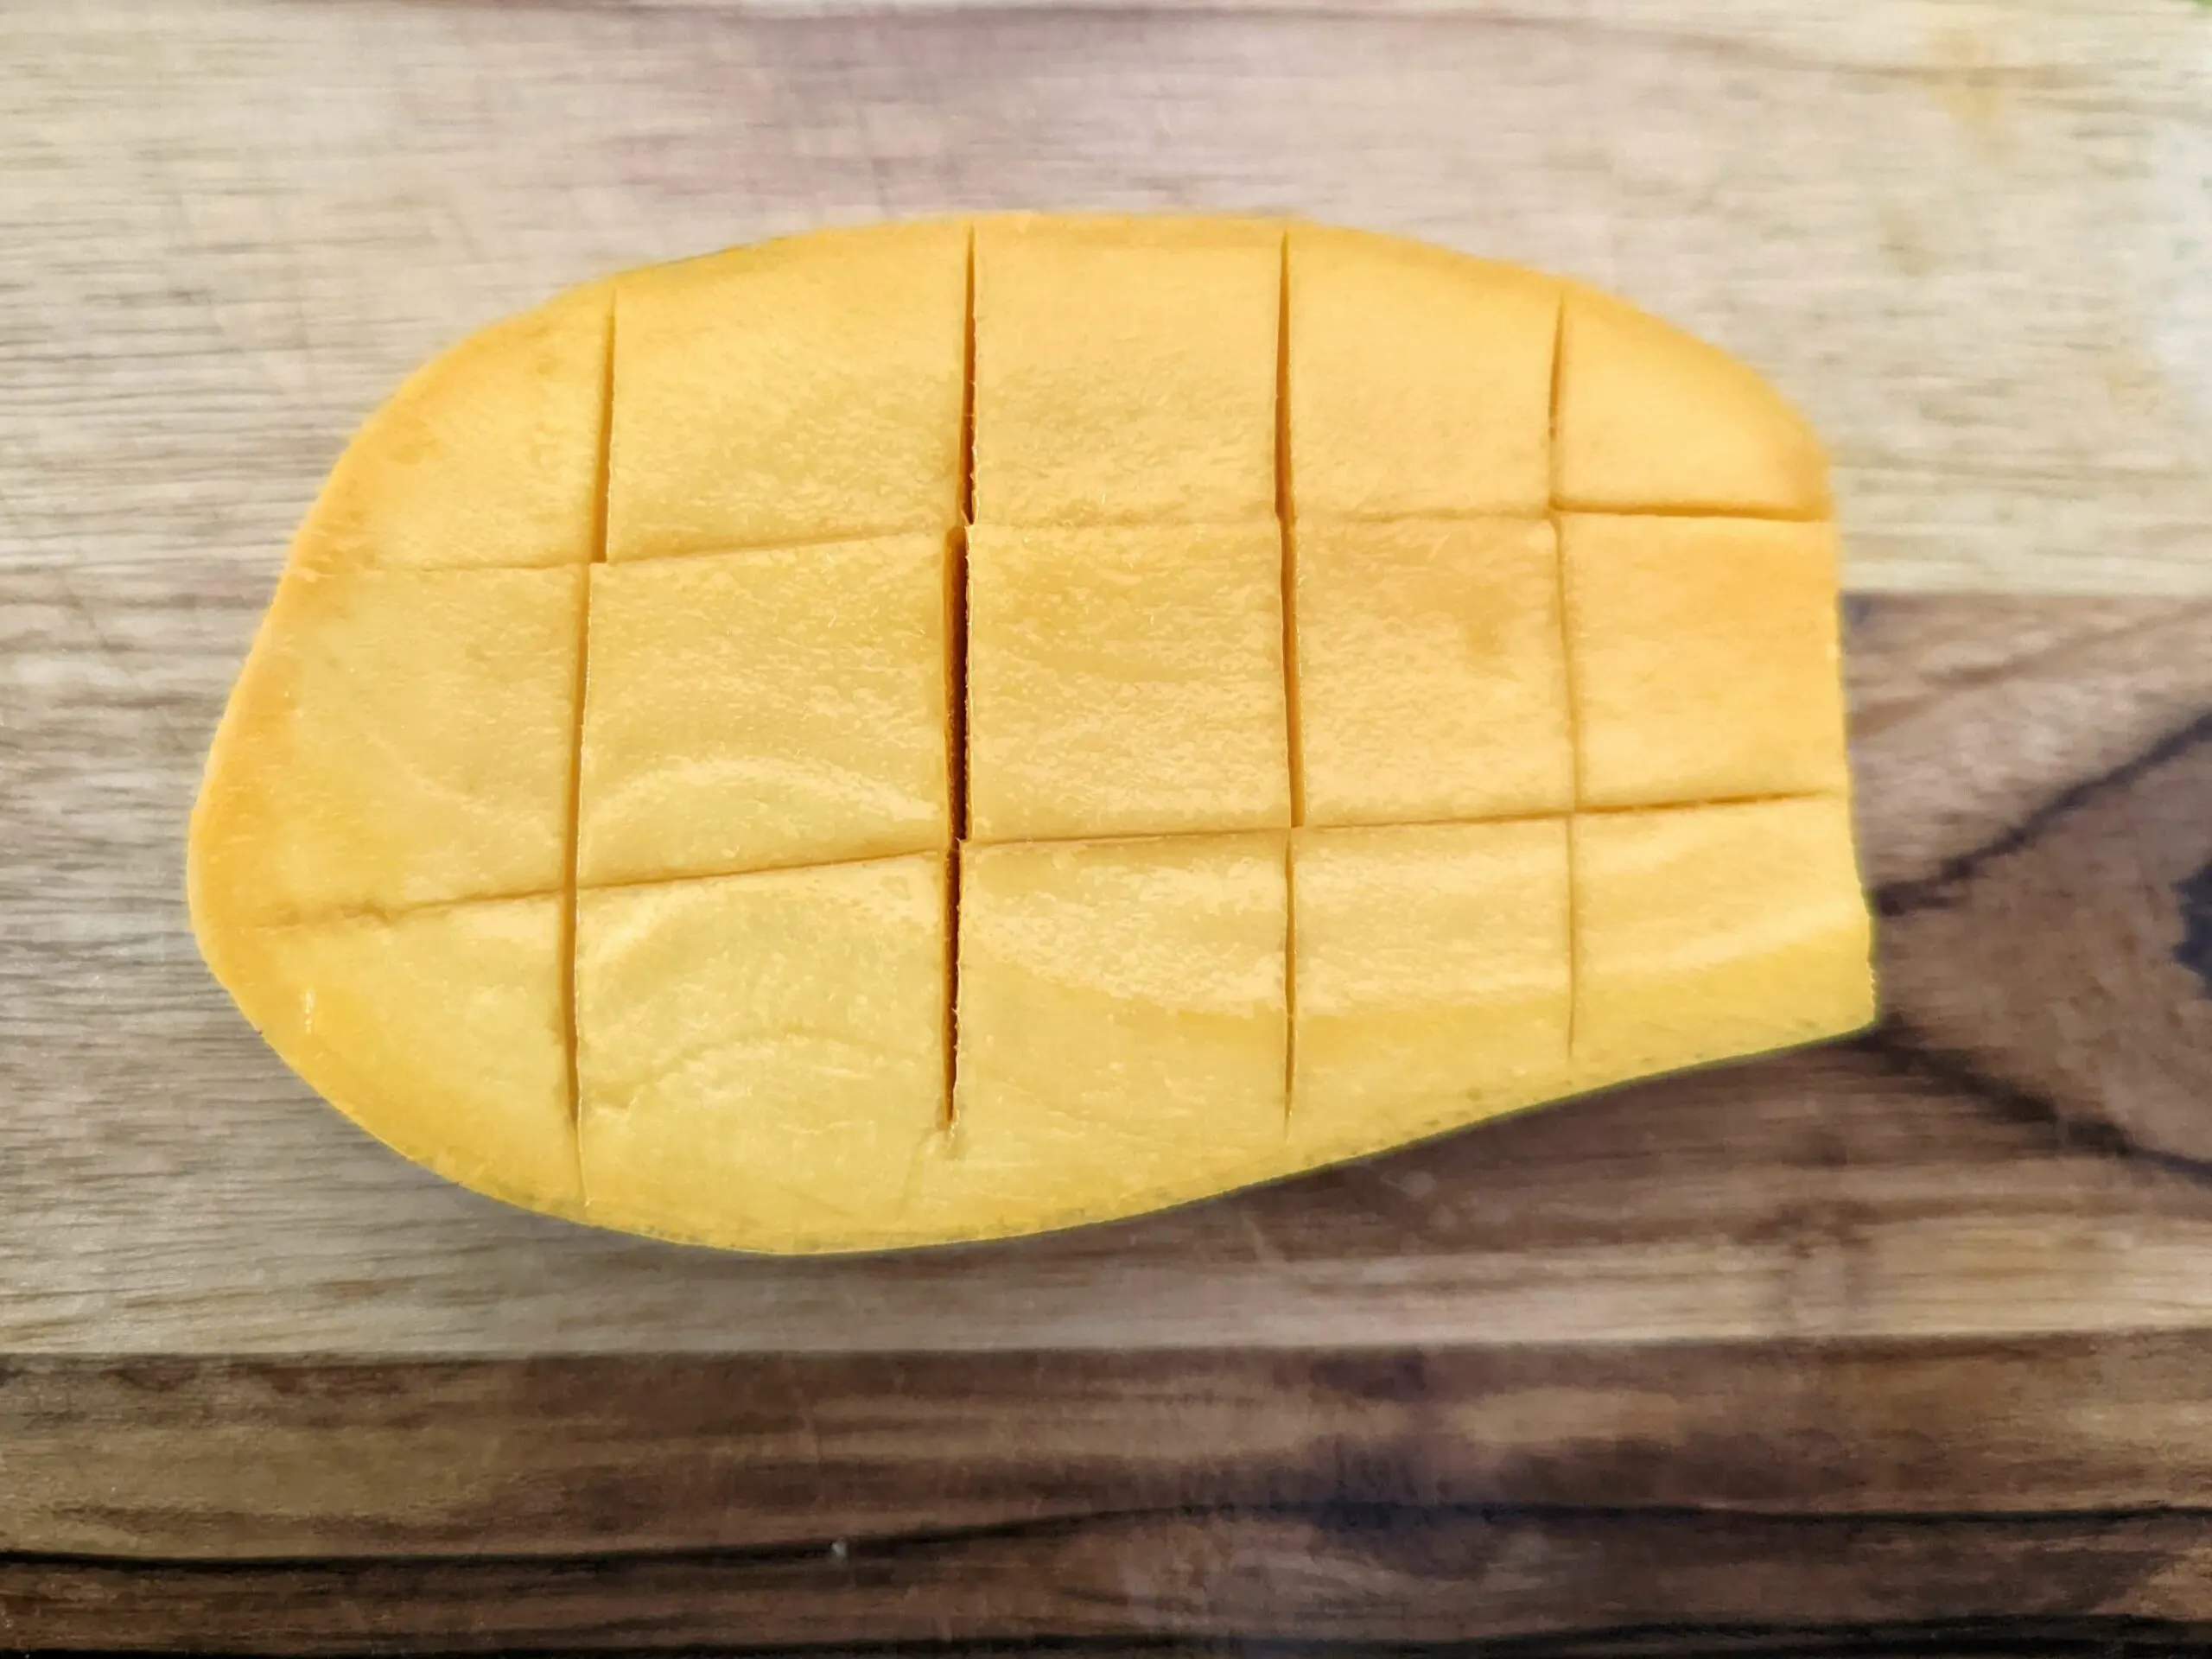 Score the mango.